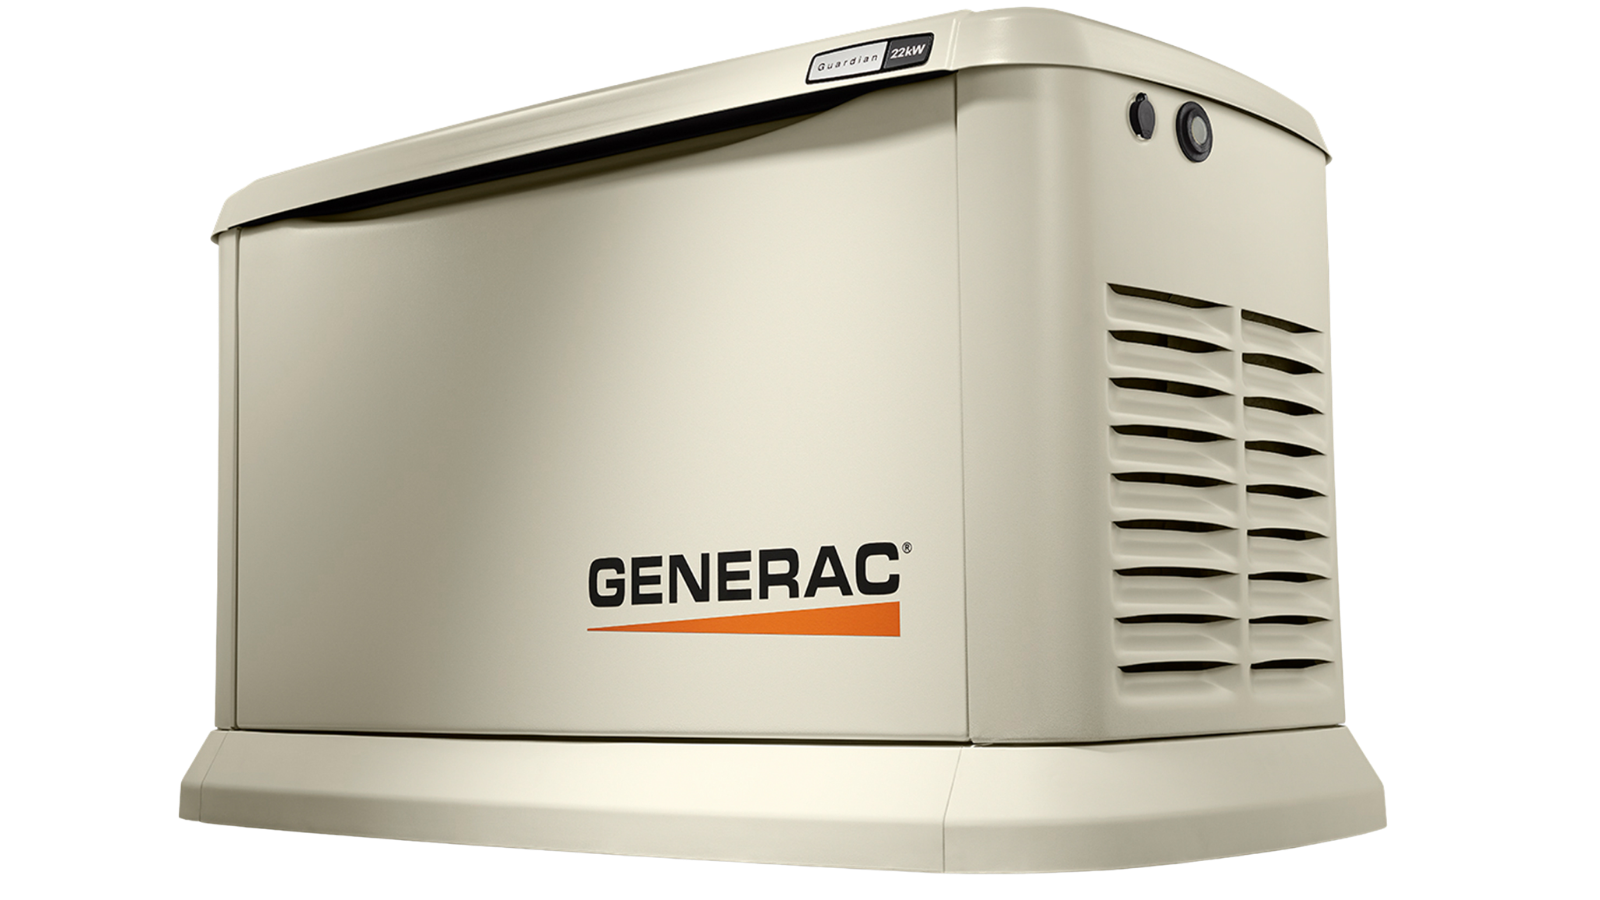 Generac generator installation by Genstar in Florida